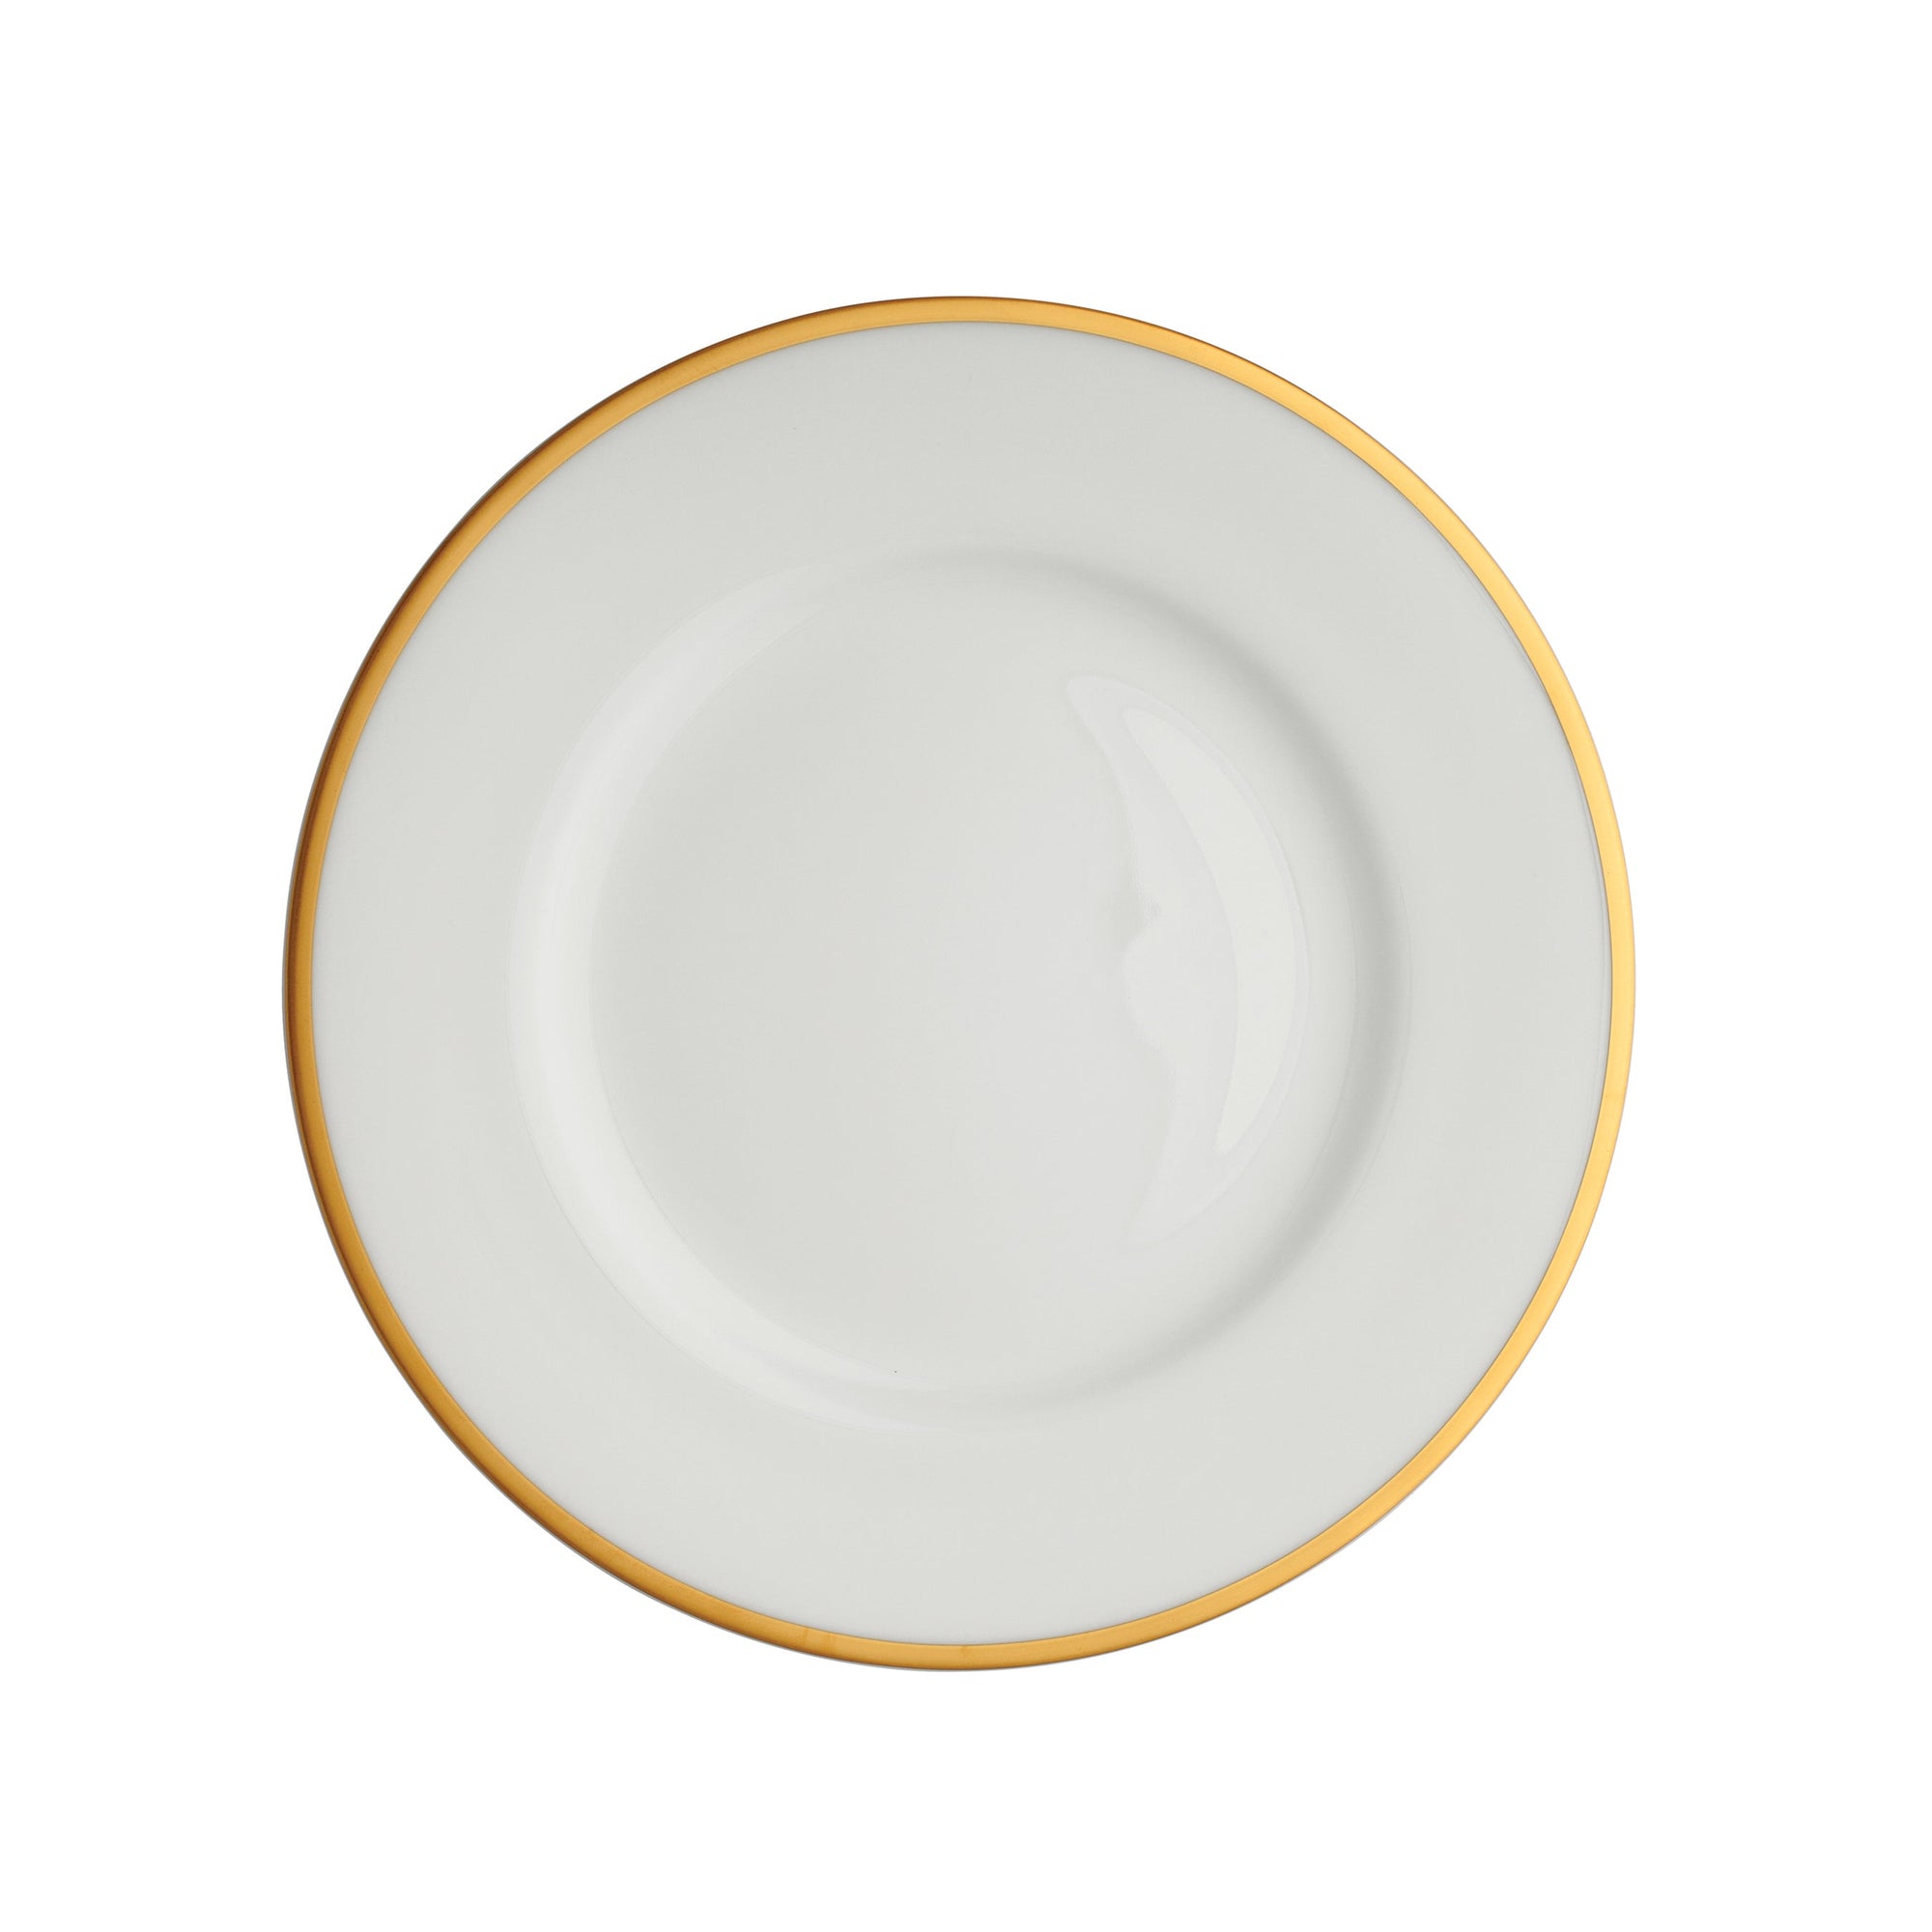 Prouna Comet Gold Salad / Dessert Plate White Background Photo